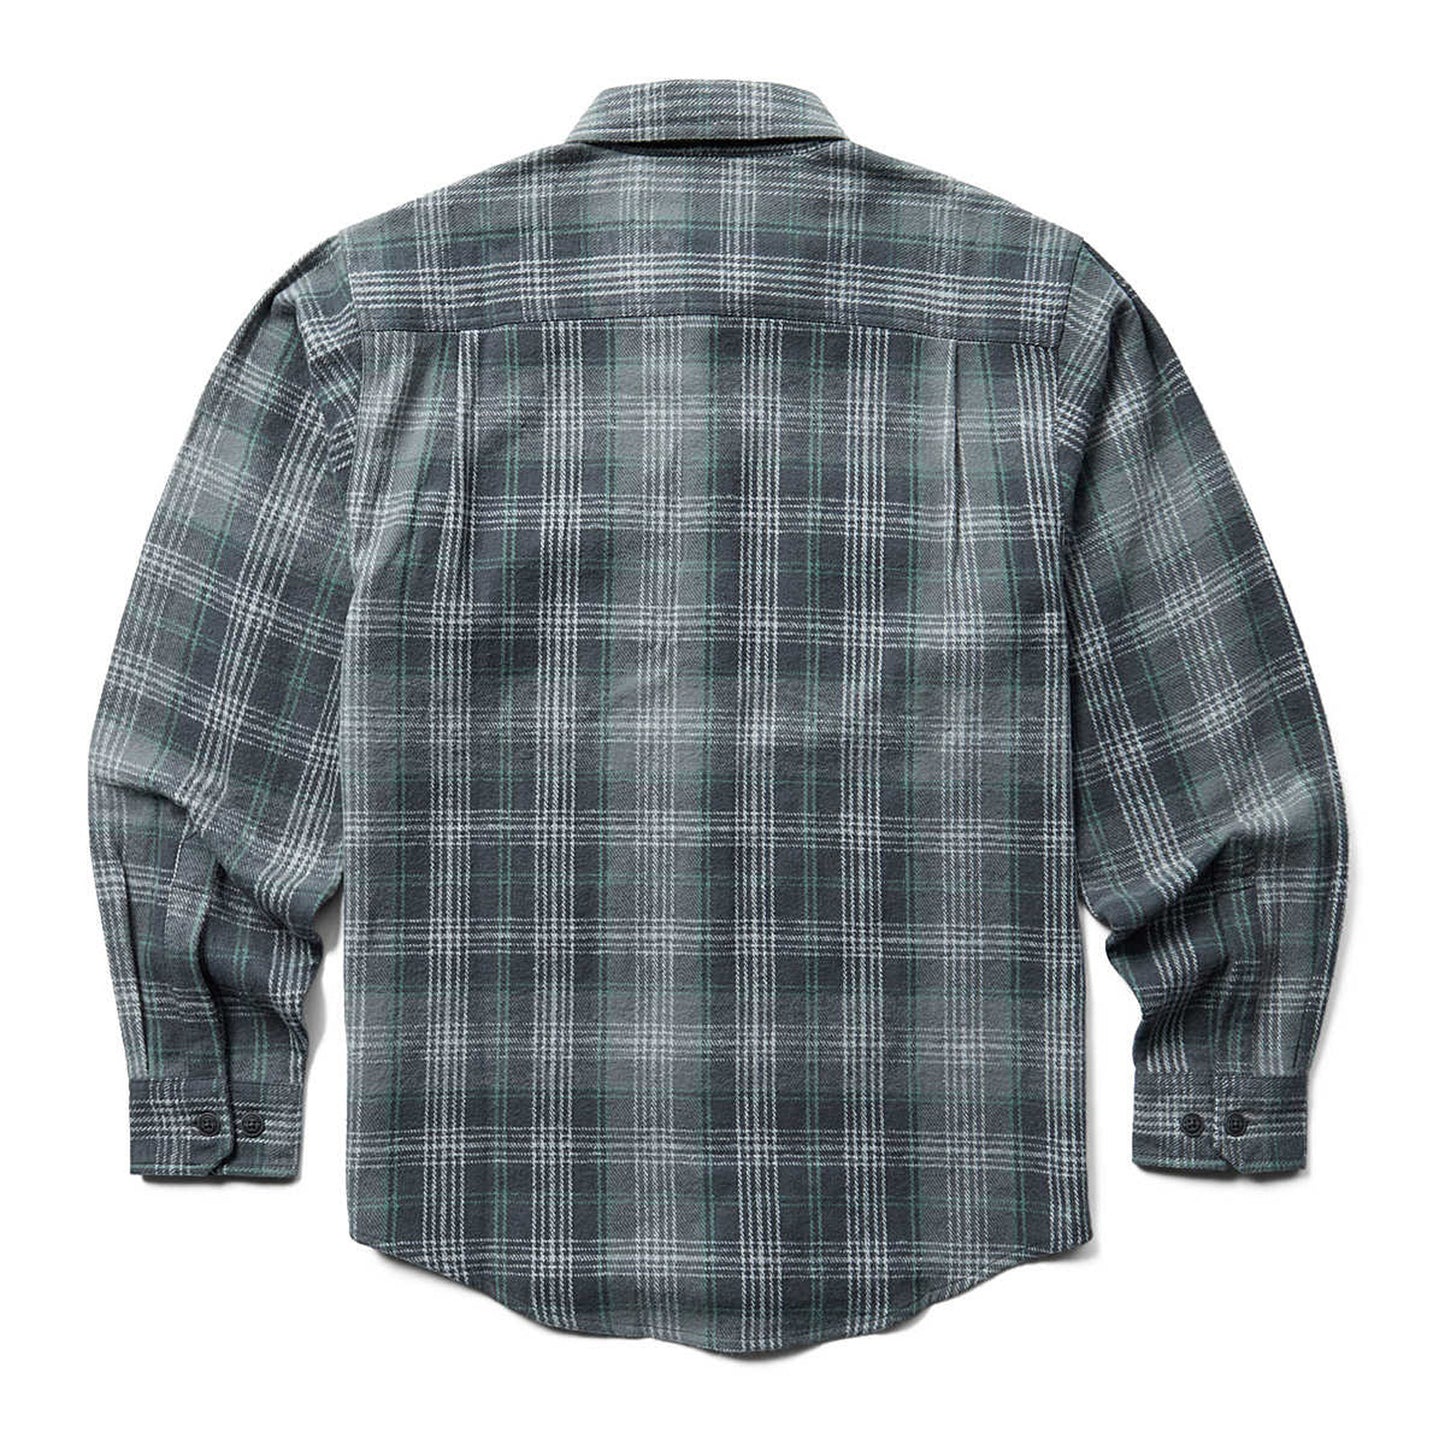 Peltz Shoes  Men's Wolverine Glacier Heavyweight Flannel Shirt Greystone Plaid W1205850-052